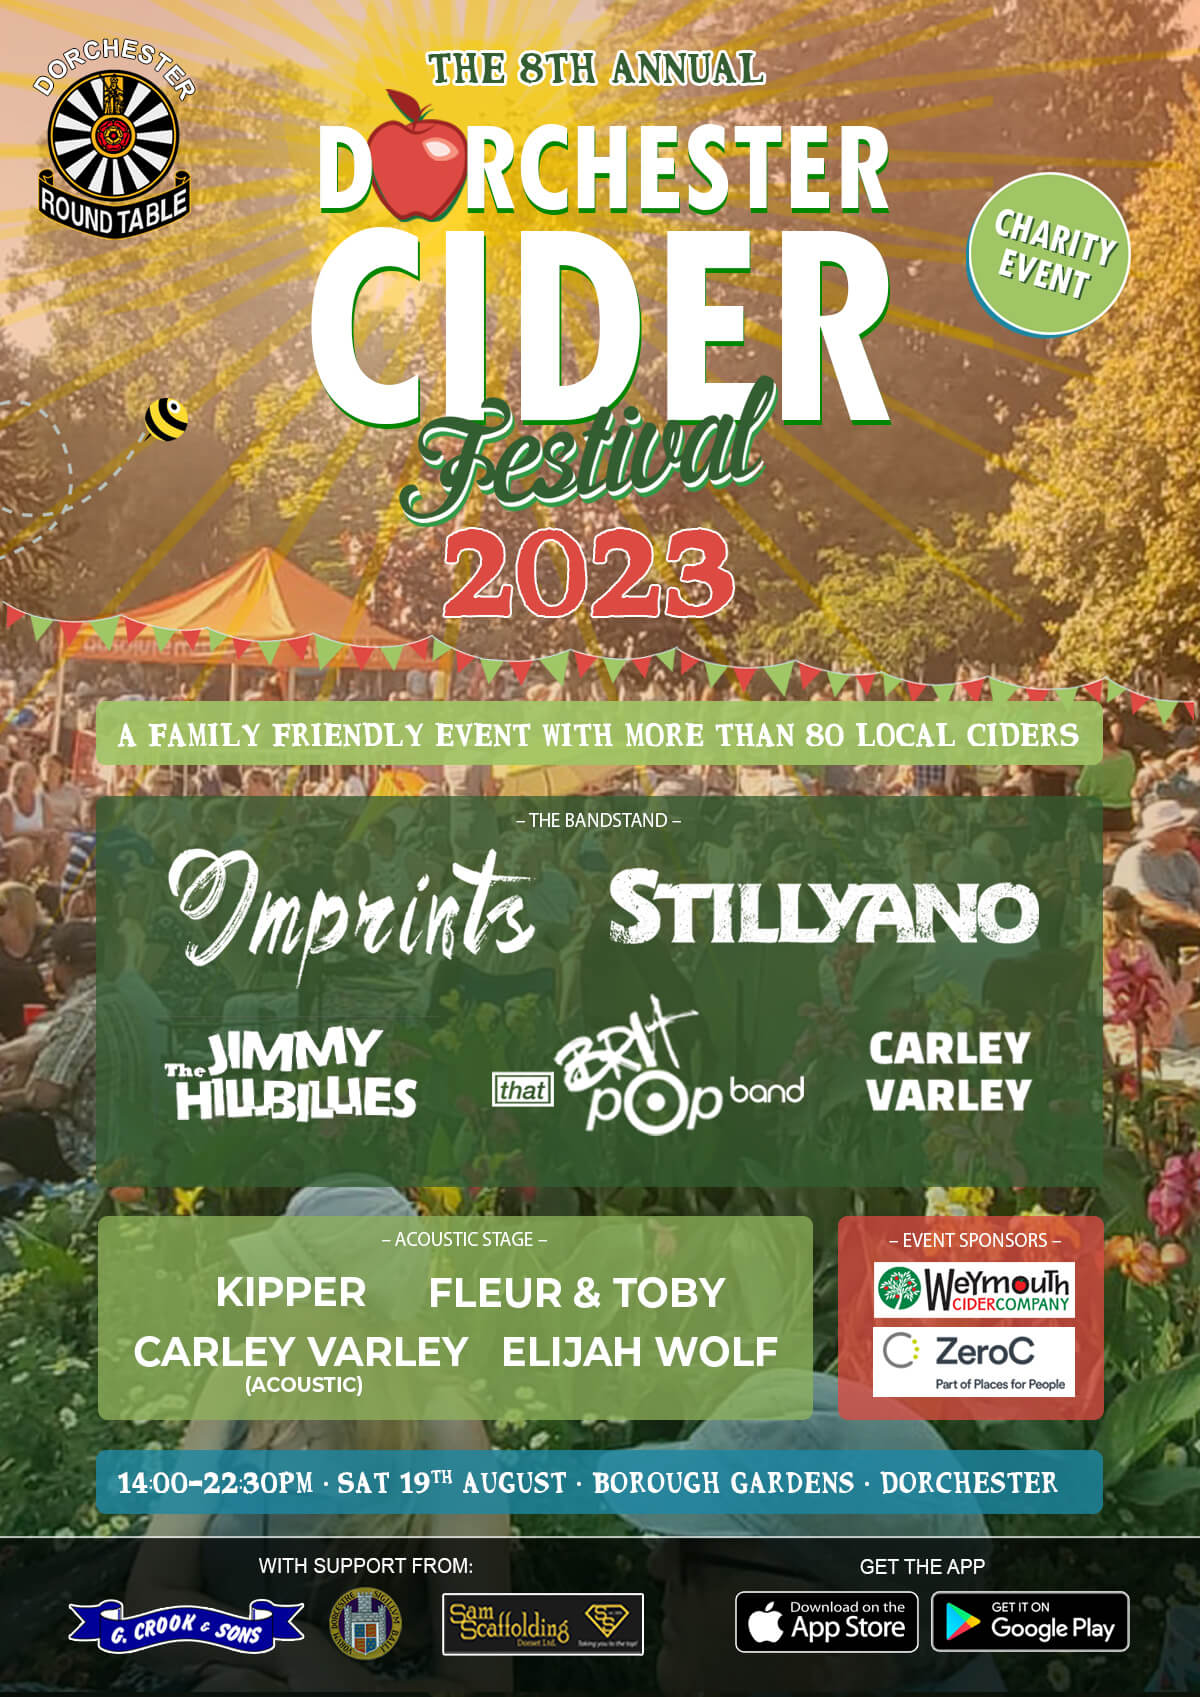 Dorchester Cider Festiva 2023 poster